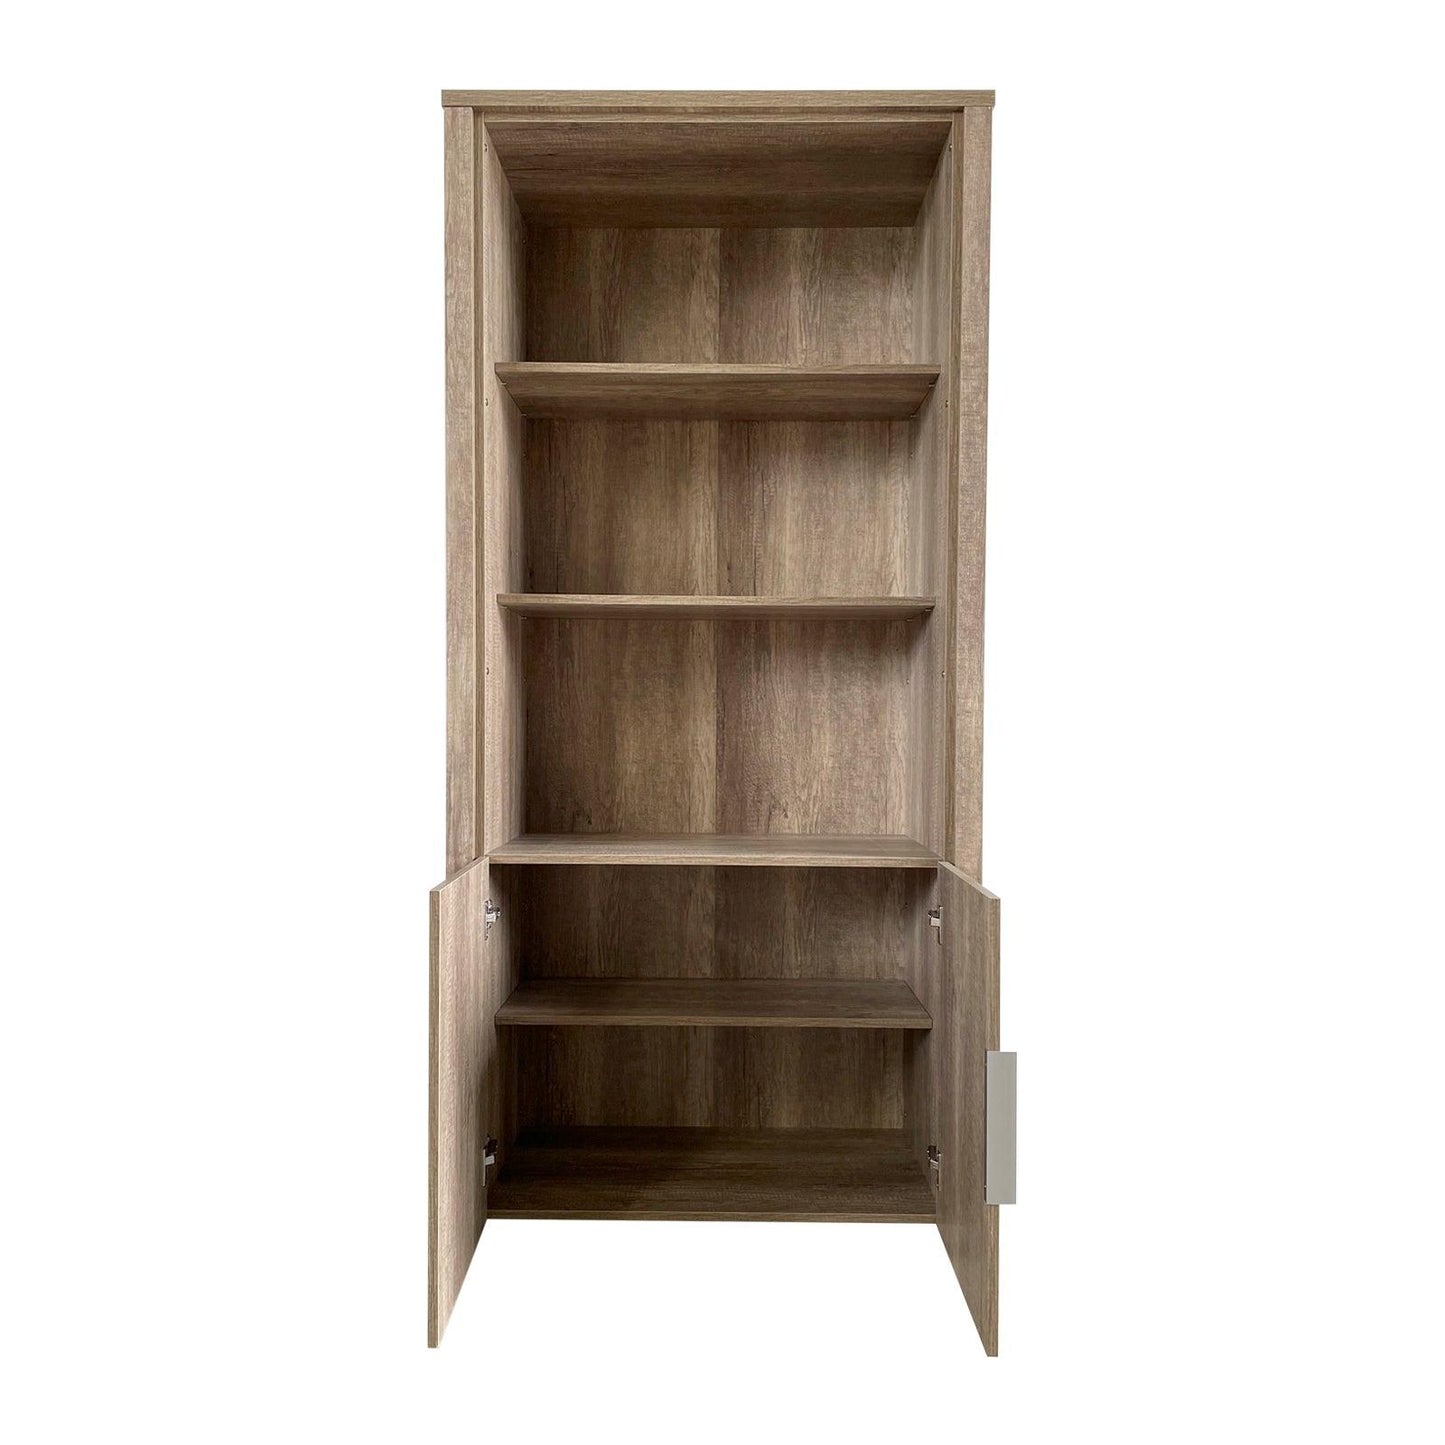 Display Shelf Book Case Stand Bookshelf Natural Wood like MDF in Oak Colour